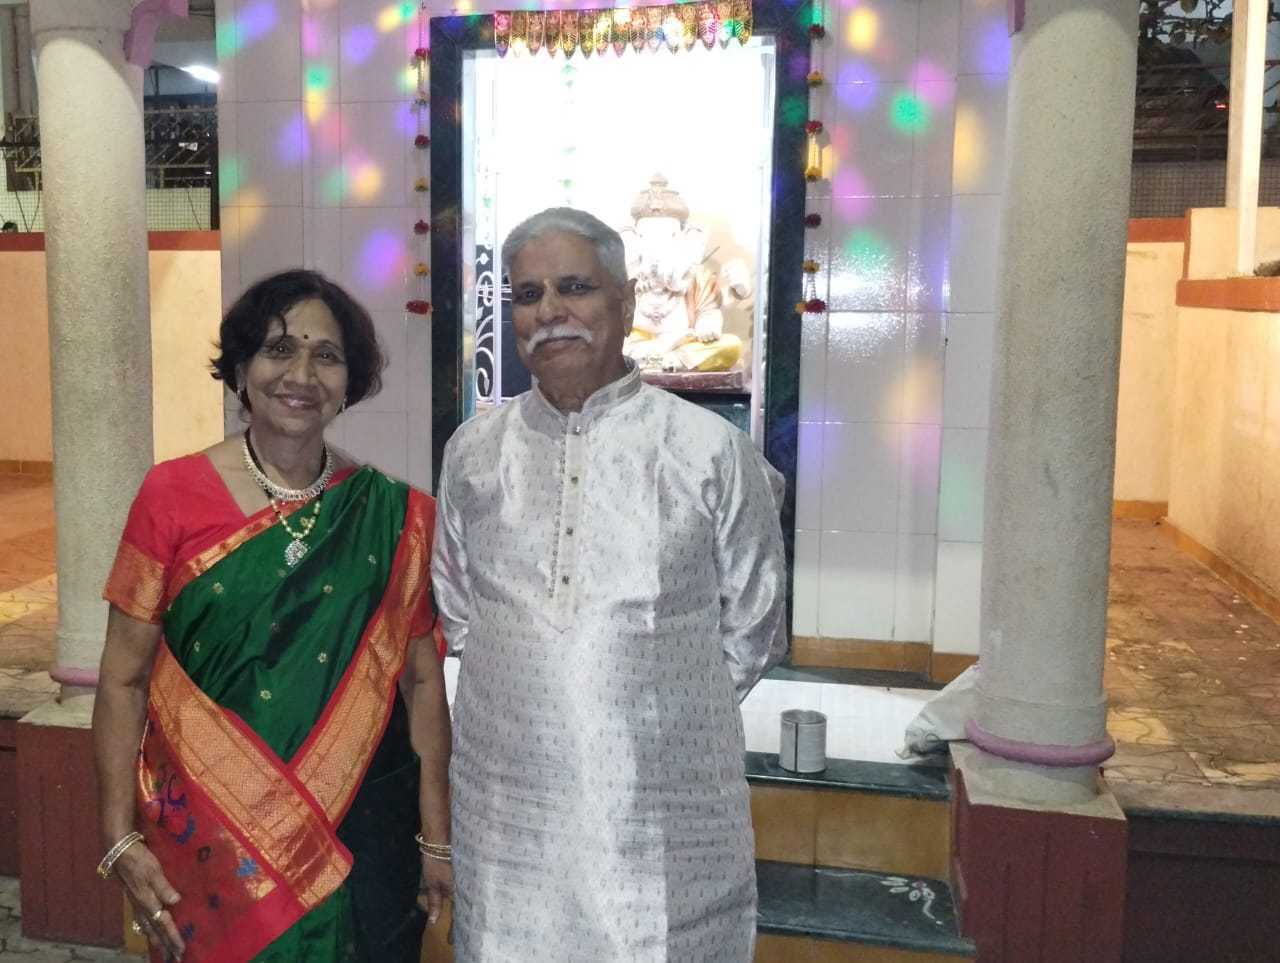 Asawari Kulkarni and Anil Yardi met through Happy Seniors and have been together for nine years now